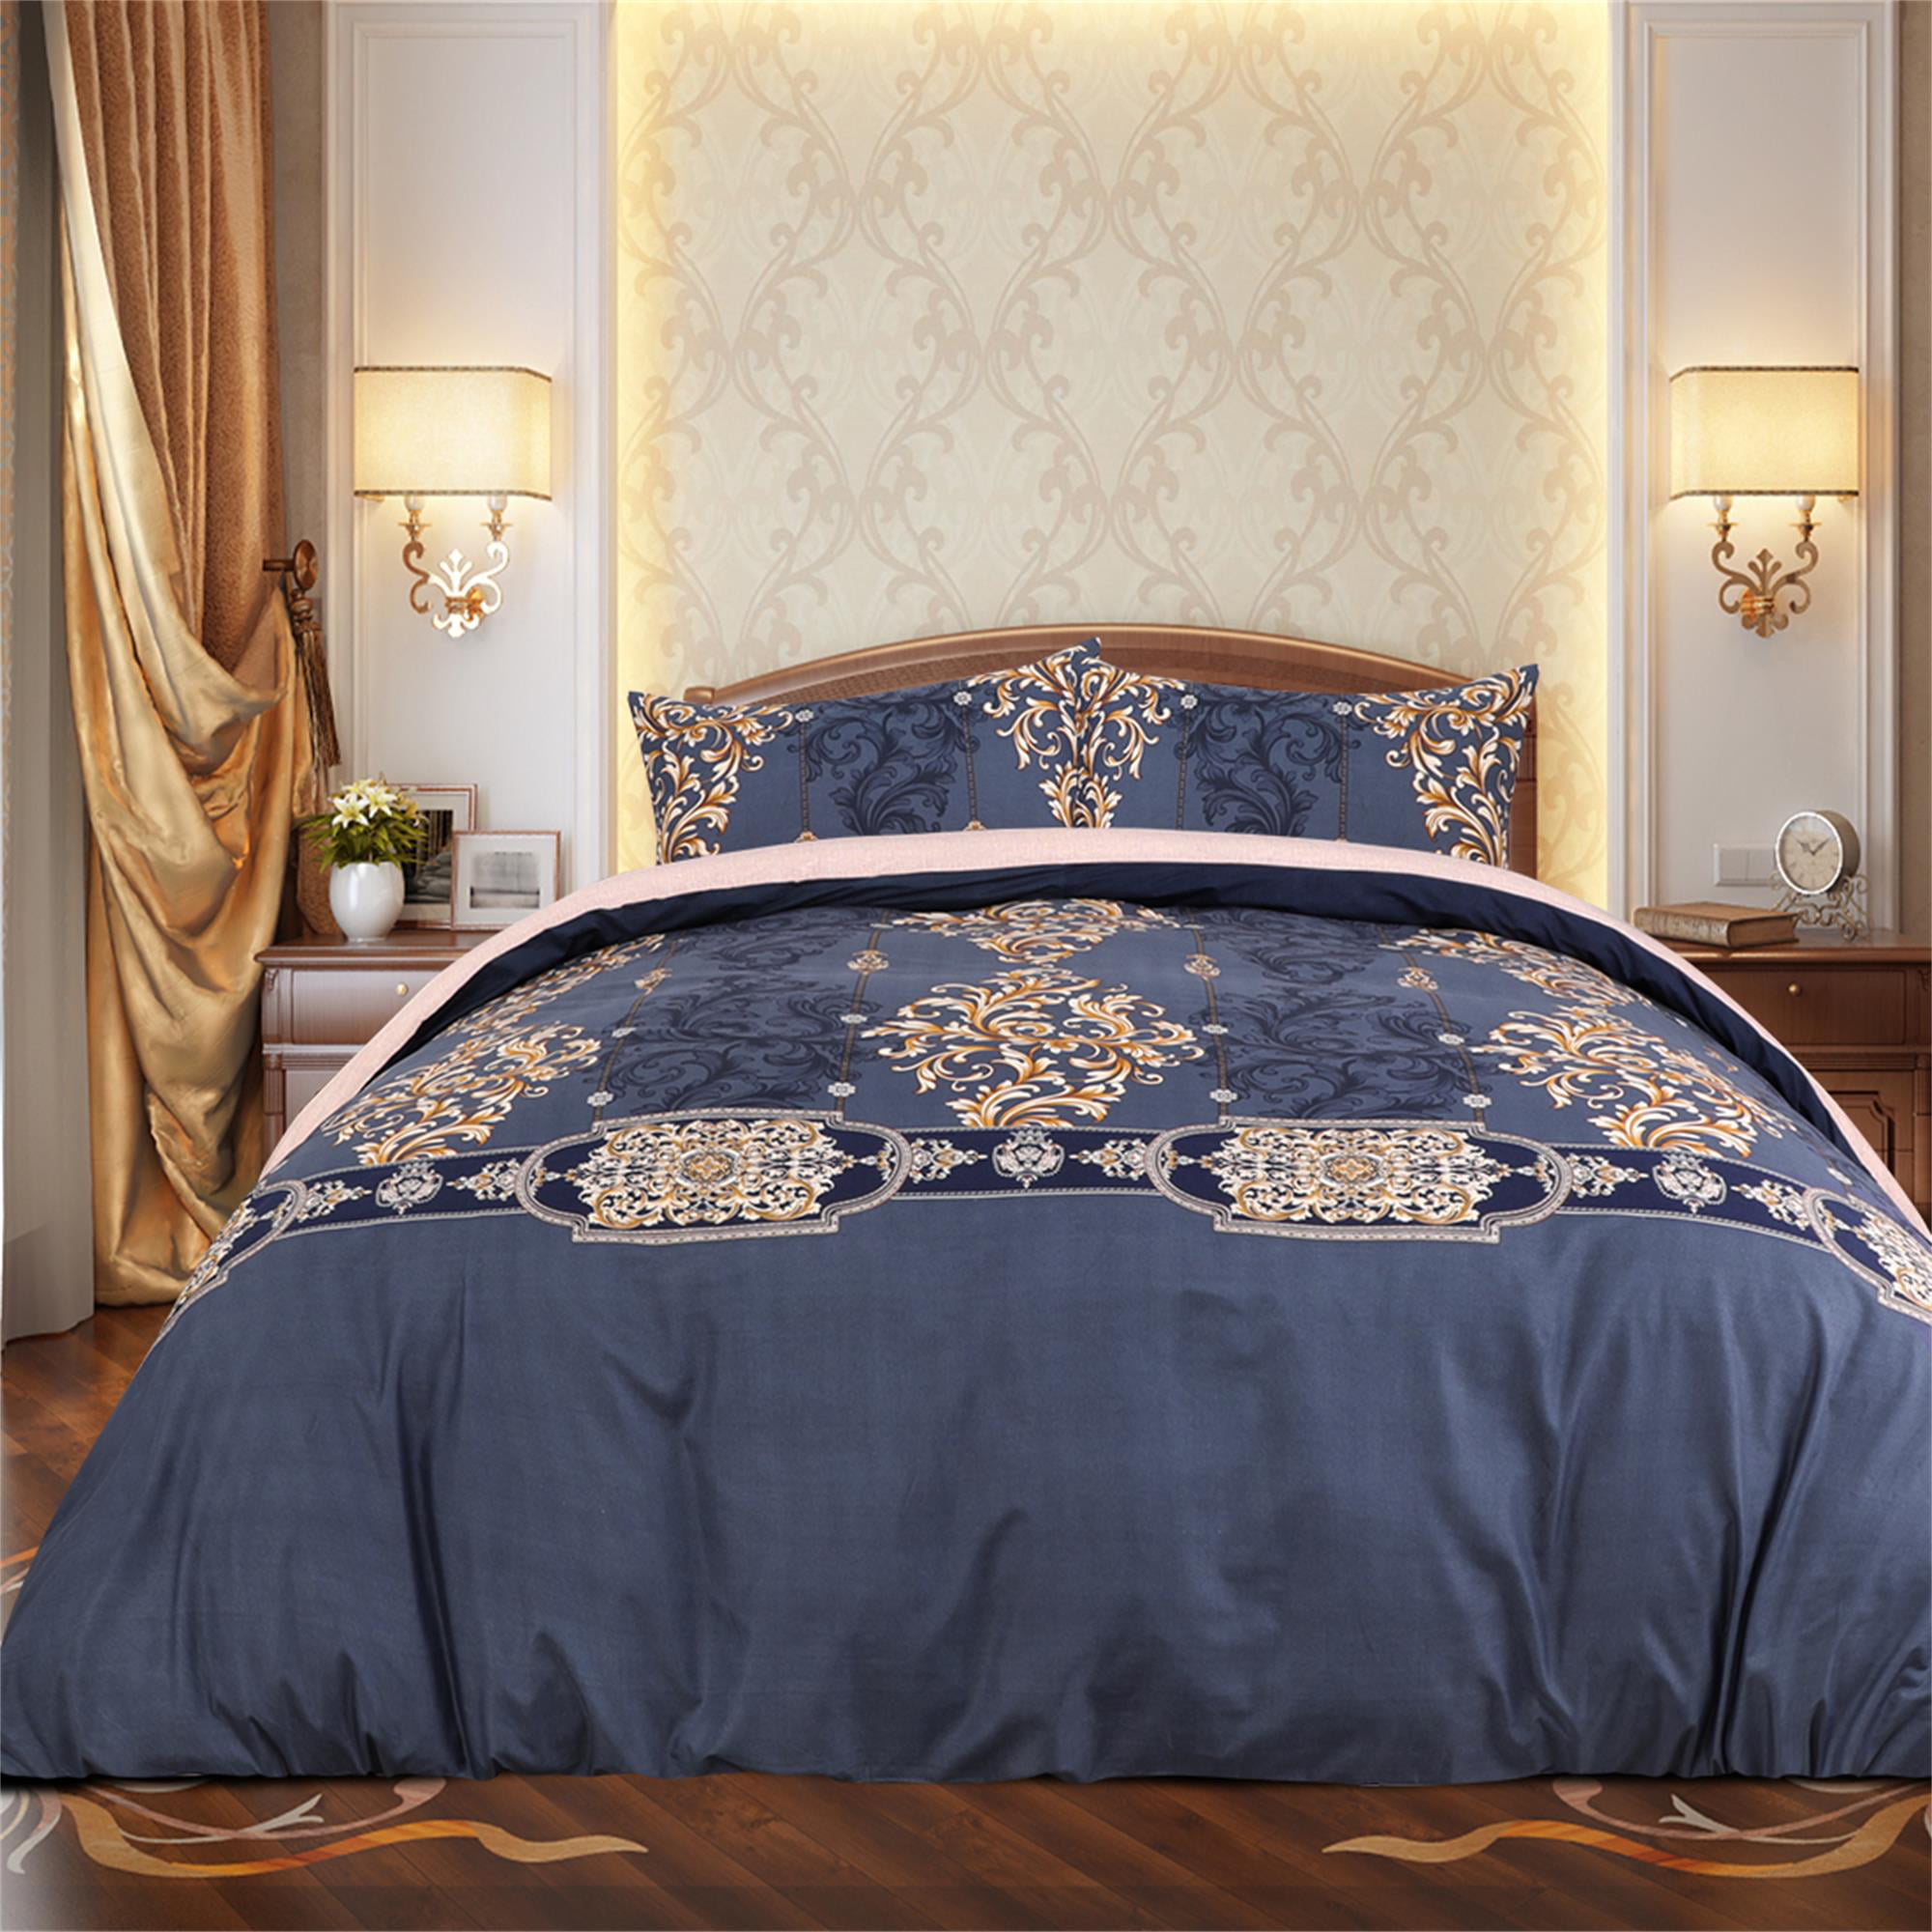 Details about   Blue Egyptian Cotton Bedding Set Queen King Bed Set Duvet Cover Bed Sheet Set 